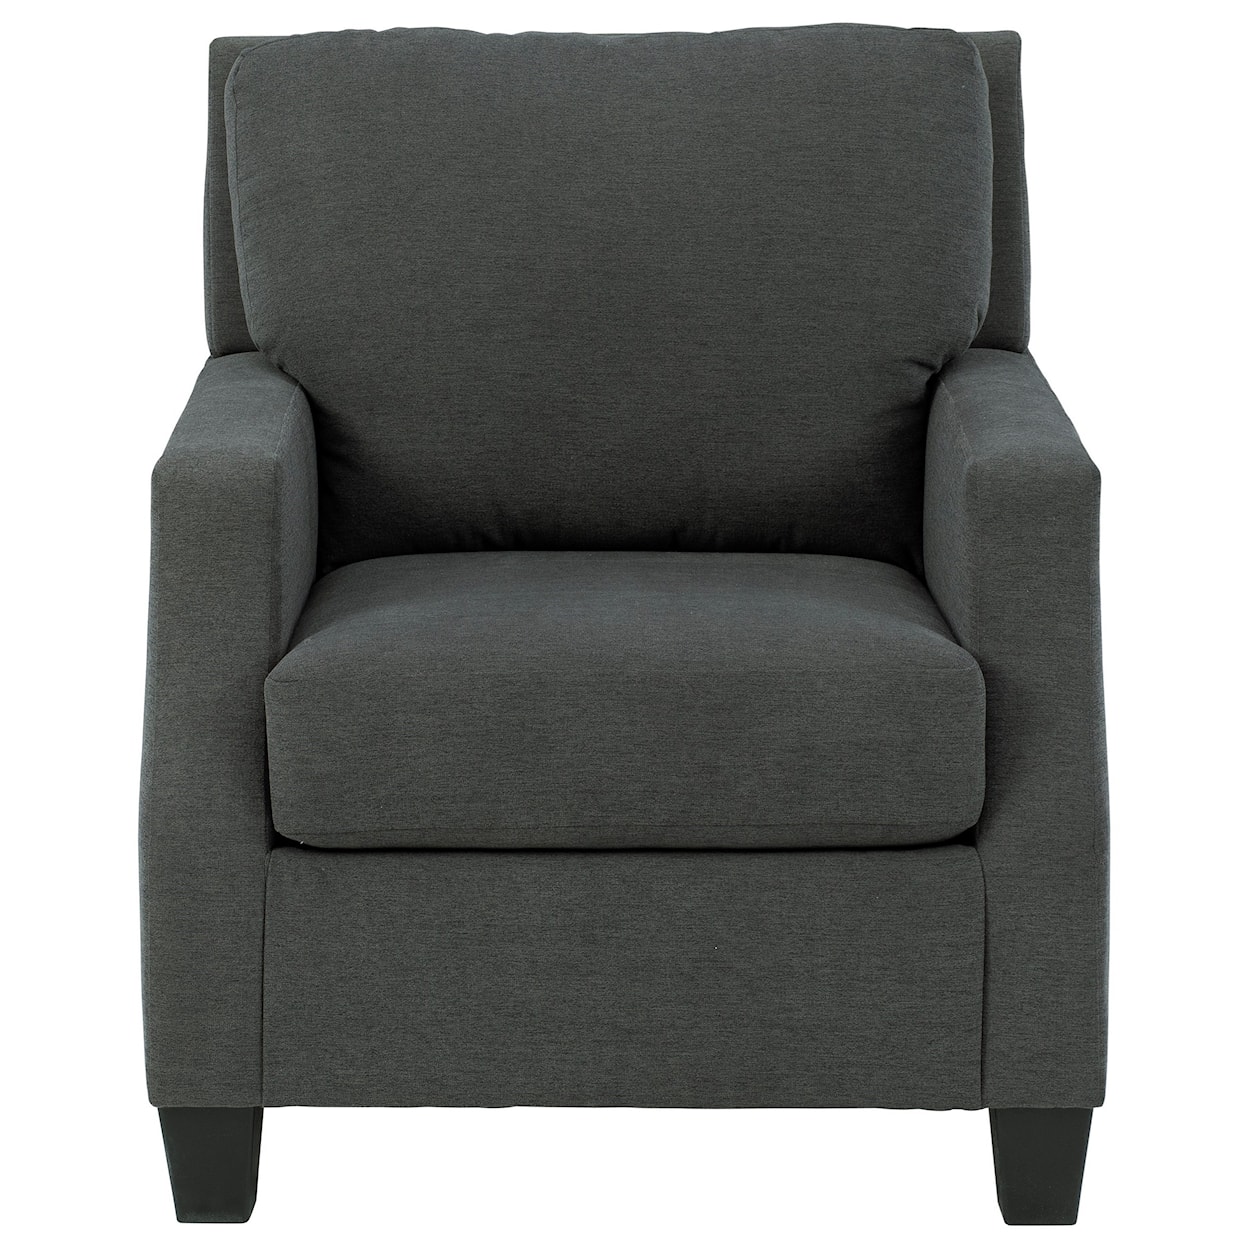 Ashley Furniture Signature Design Bayonne Chair